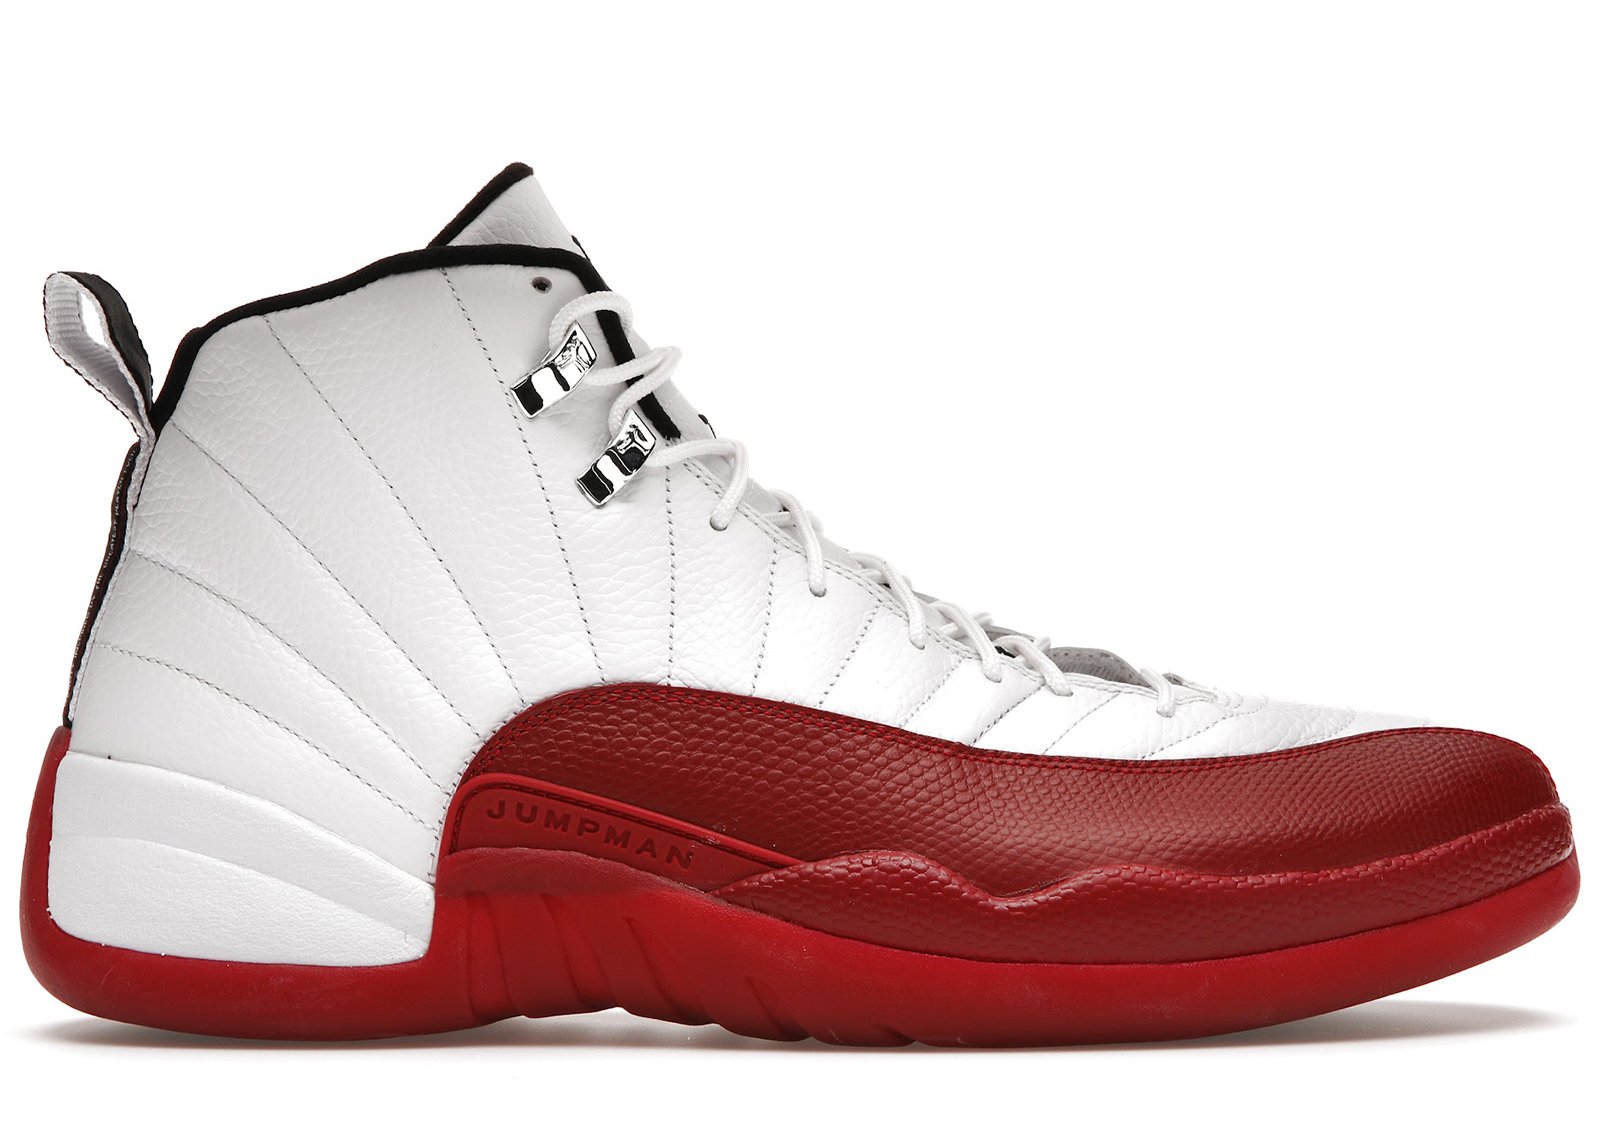 Jordan 12 Retro Cherry (2009) sneakers